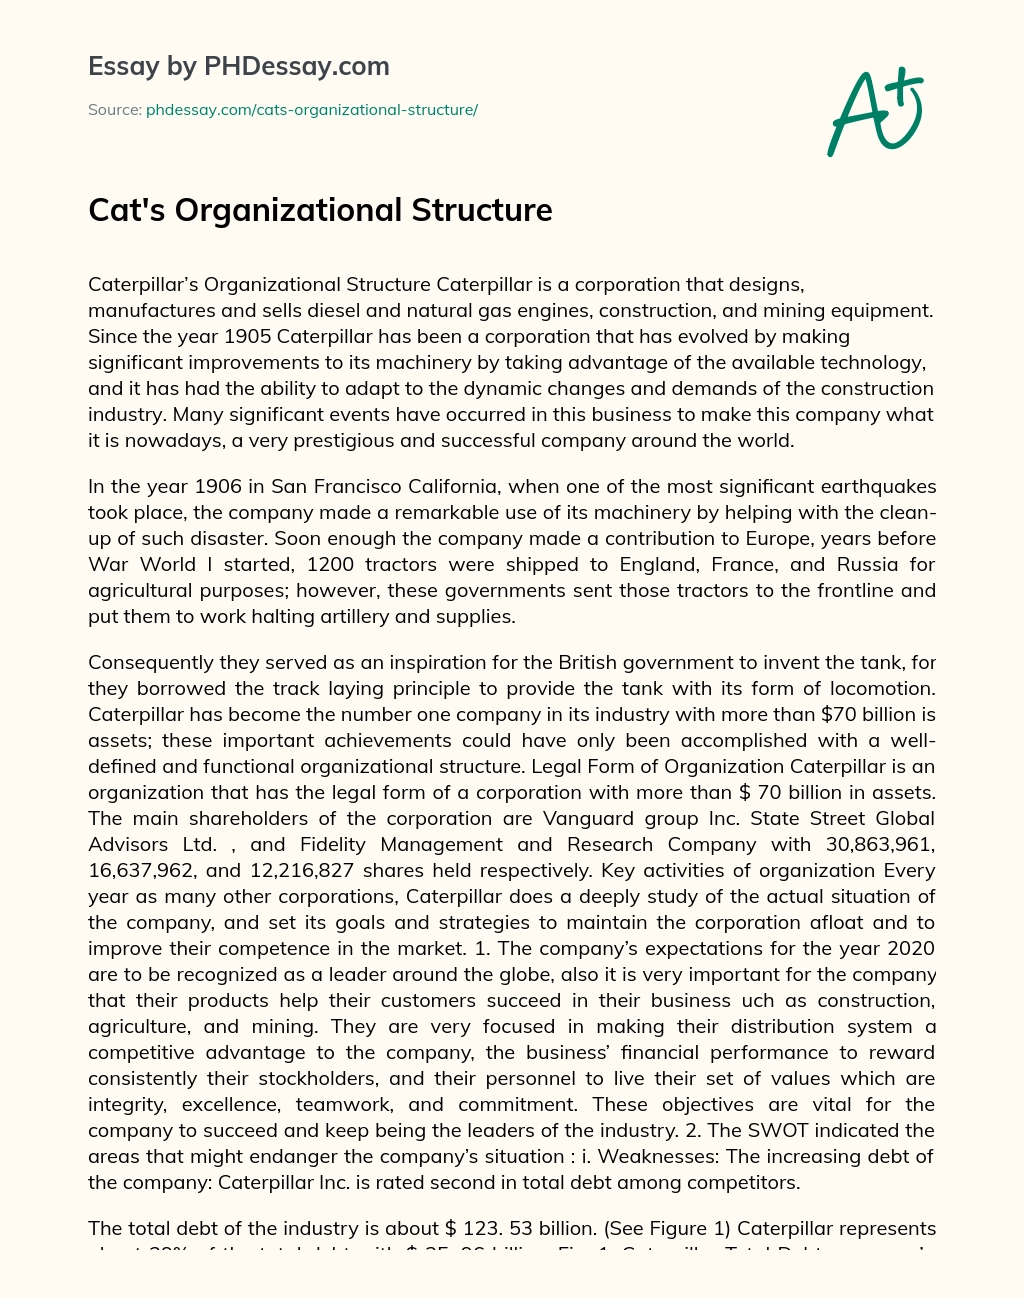 Caterpillar’s Organizational Structure essay